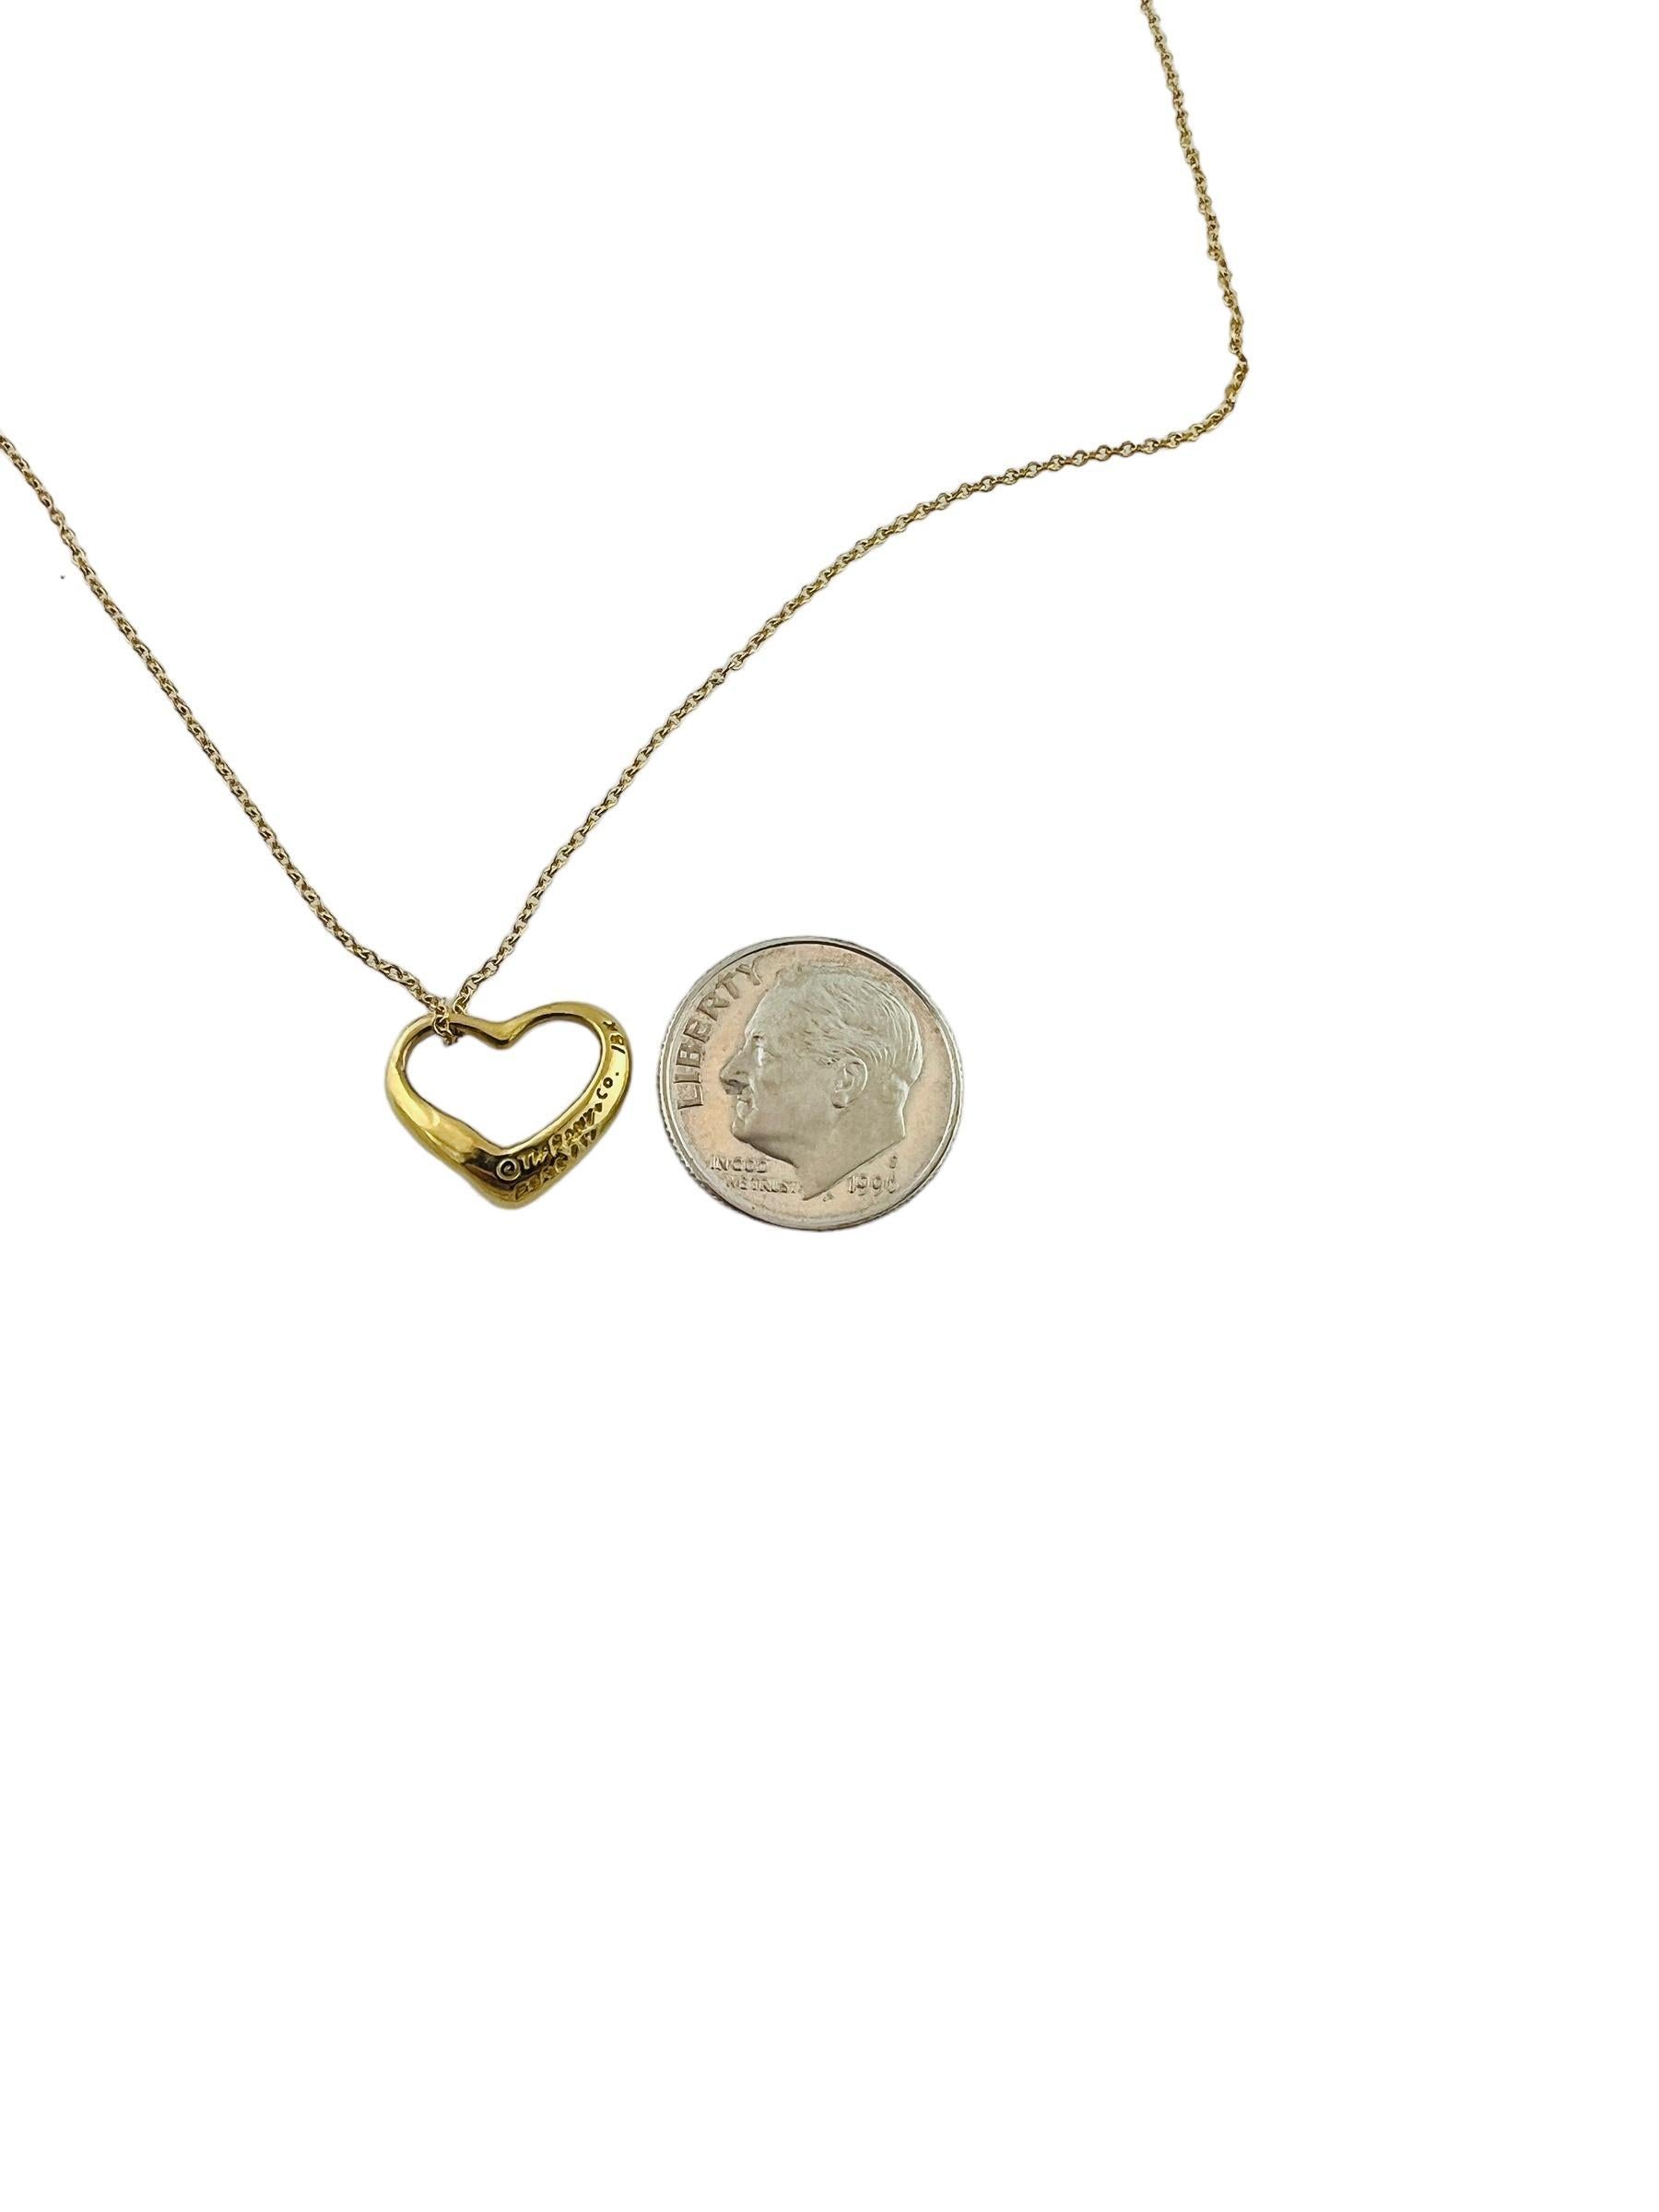 Tiffany & Co. Elsa Peretti 18K Yellow Gold Open Heart Pendant Necklace #15424 5